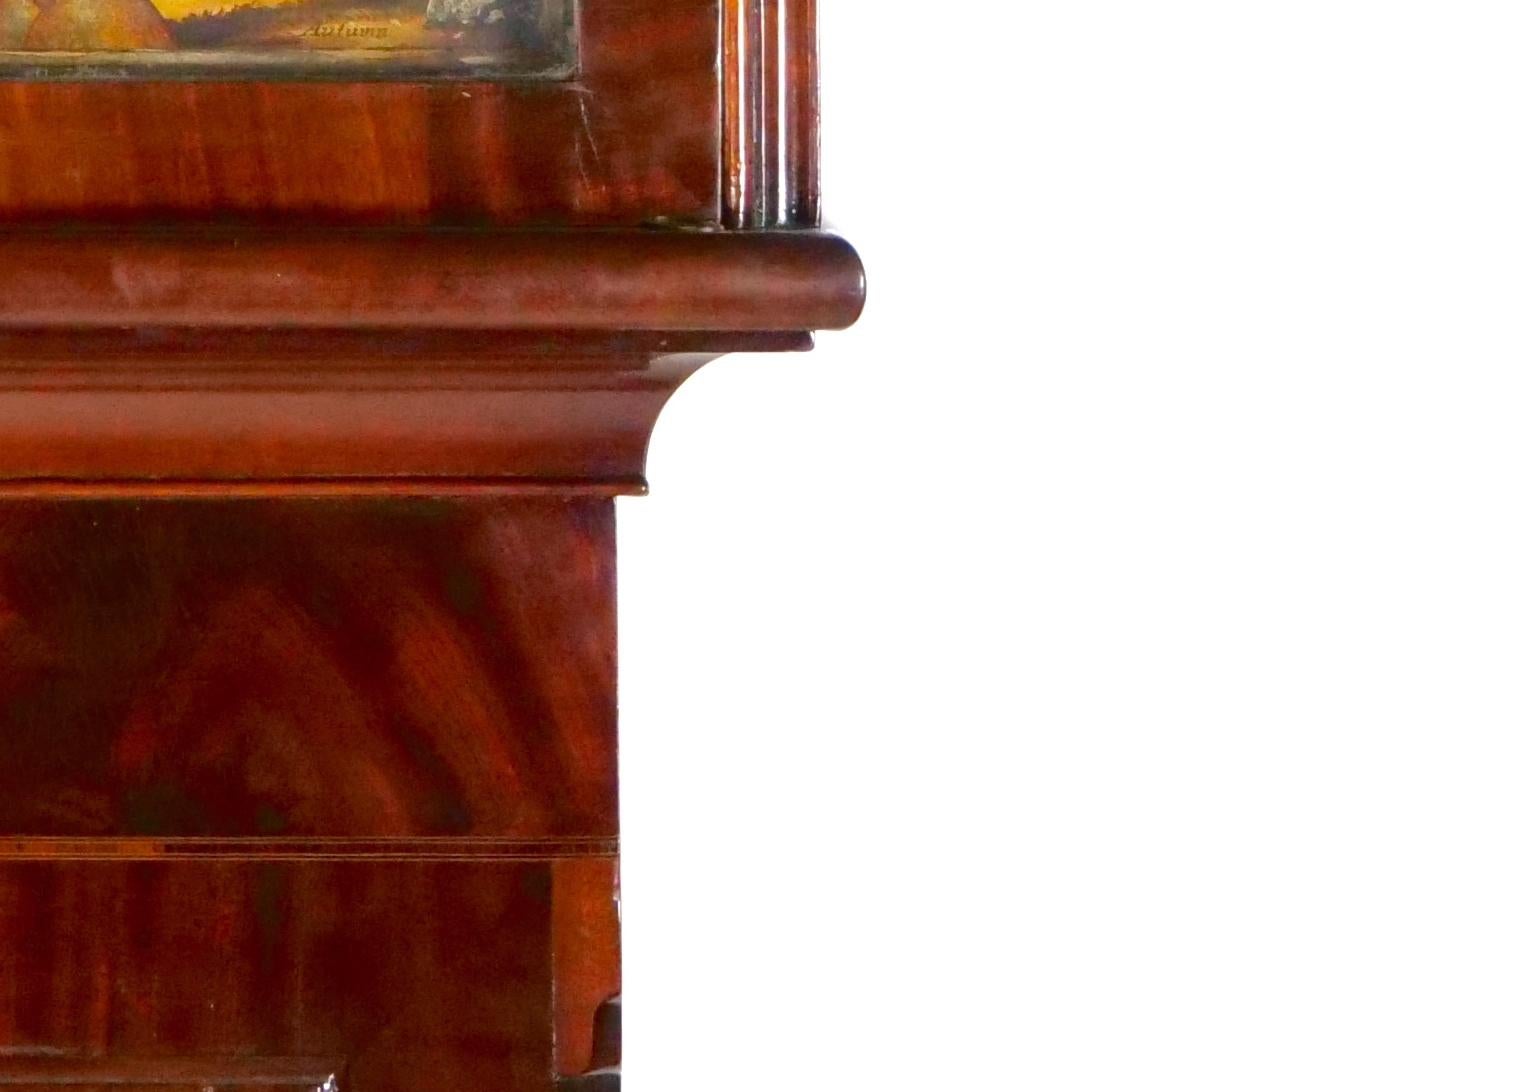 Antique Mahogany Wood  Longcase Clock 